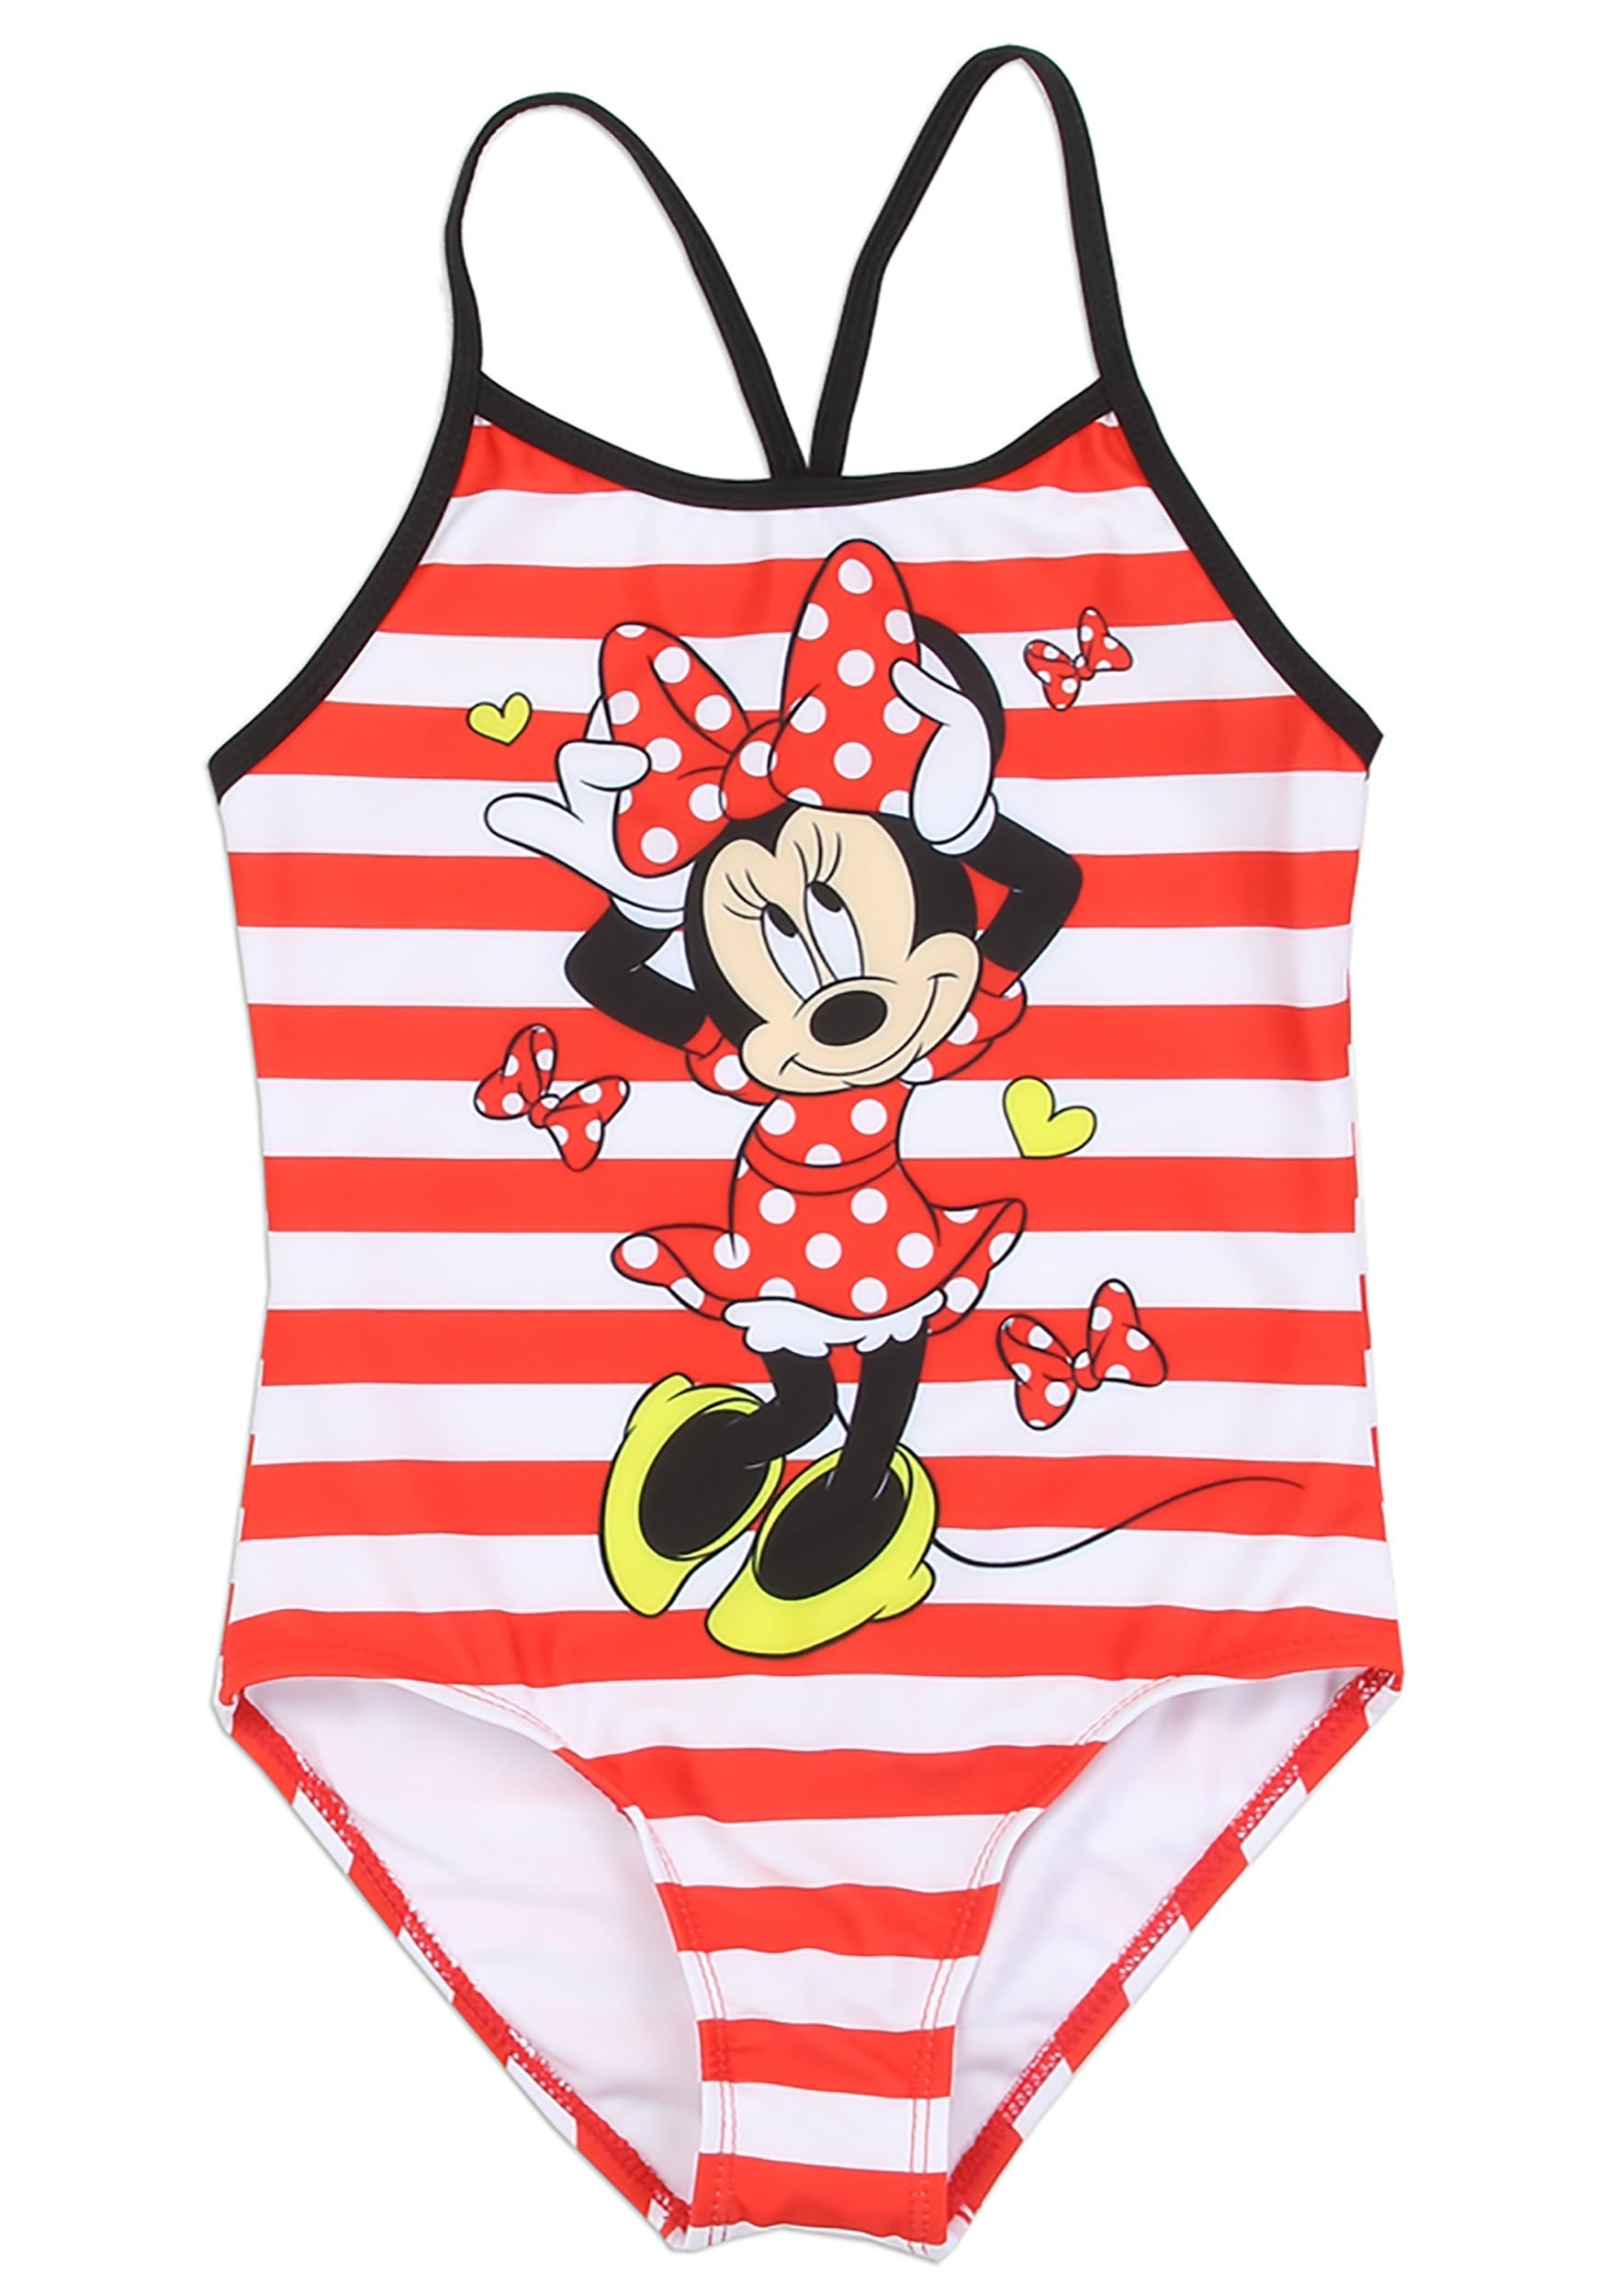 Girls Toddlers One Piece Swimsuit Tutu Swimwear 2-6Y Bath Striped Minnie Mouse 